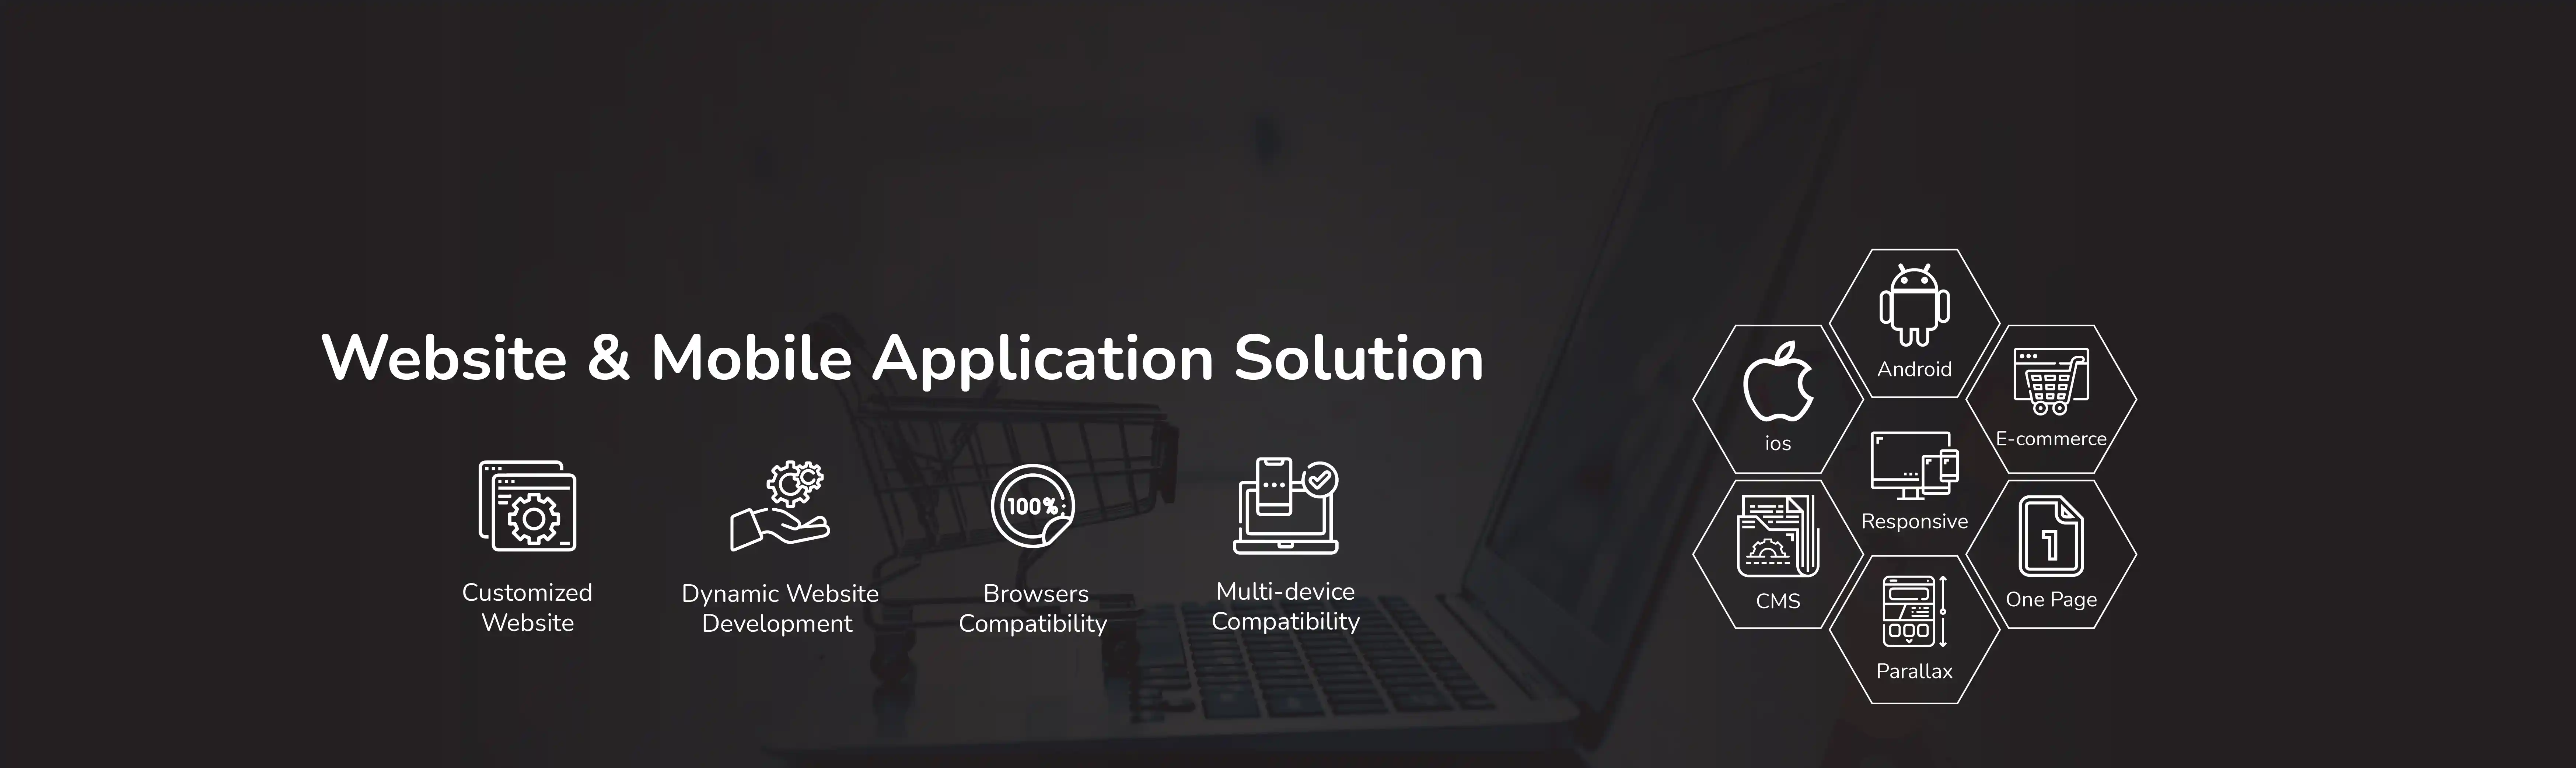 website mobile application solution home banner